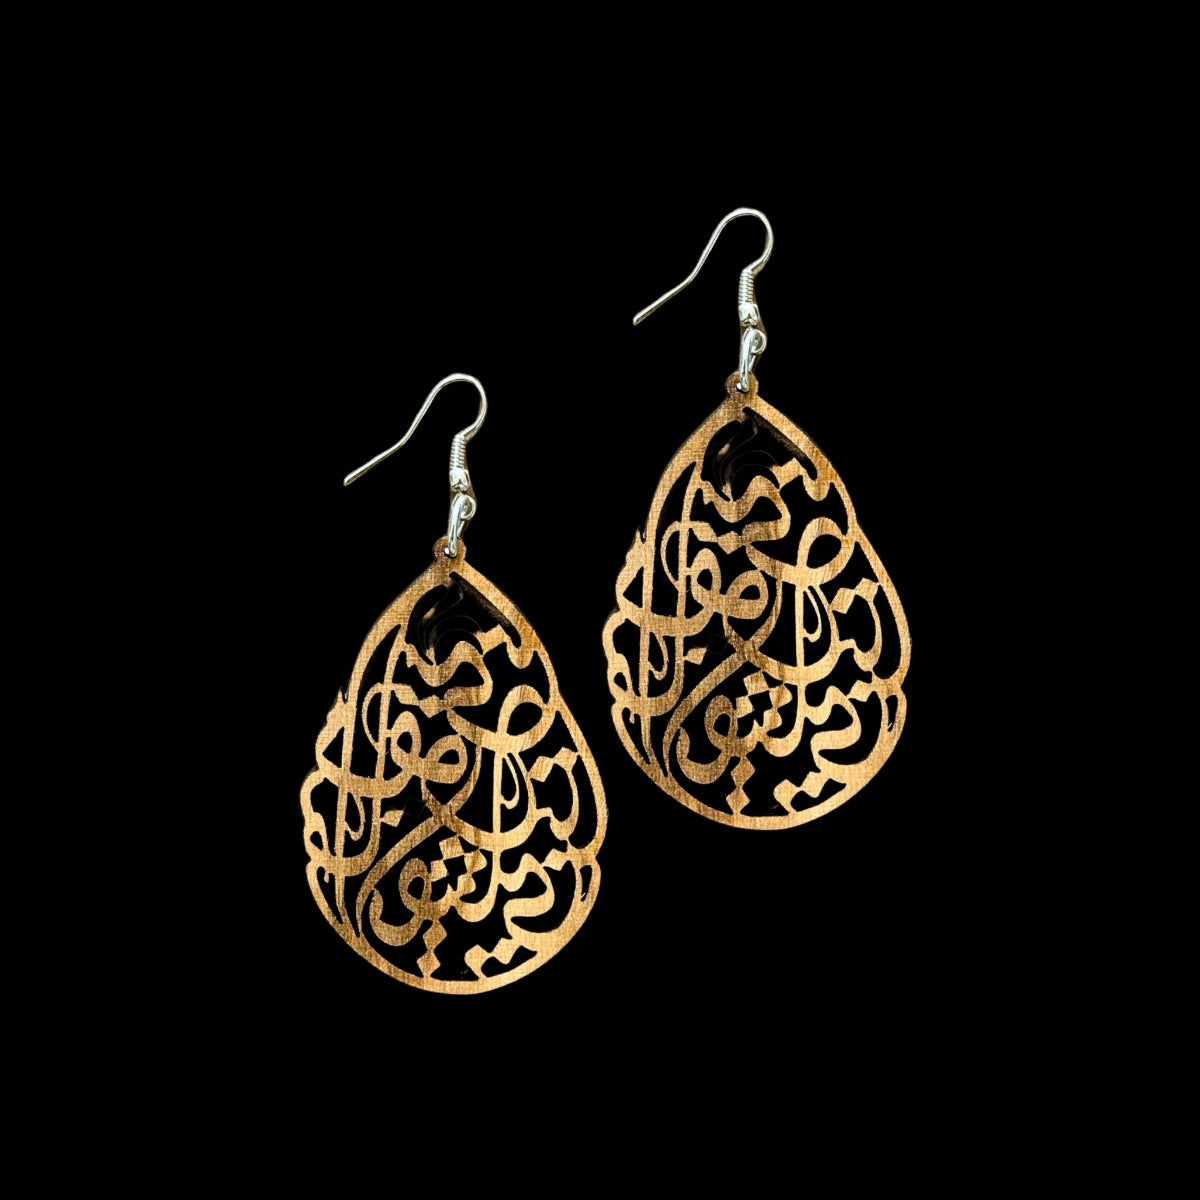 Olive Wood Arabic Calligraphy Earrings "What doesn't kill me..."